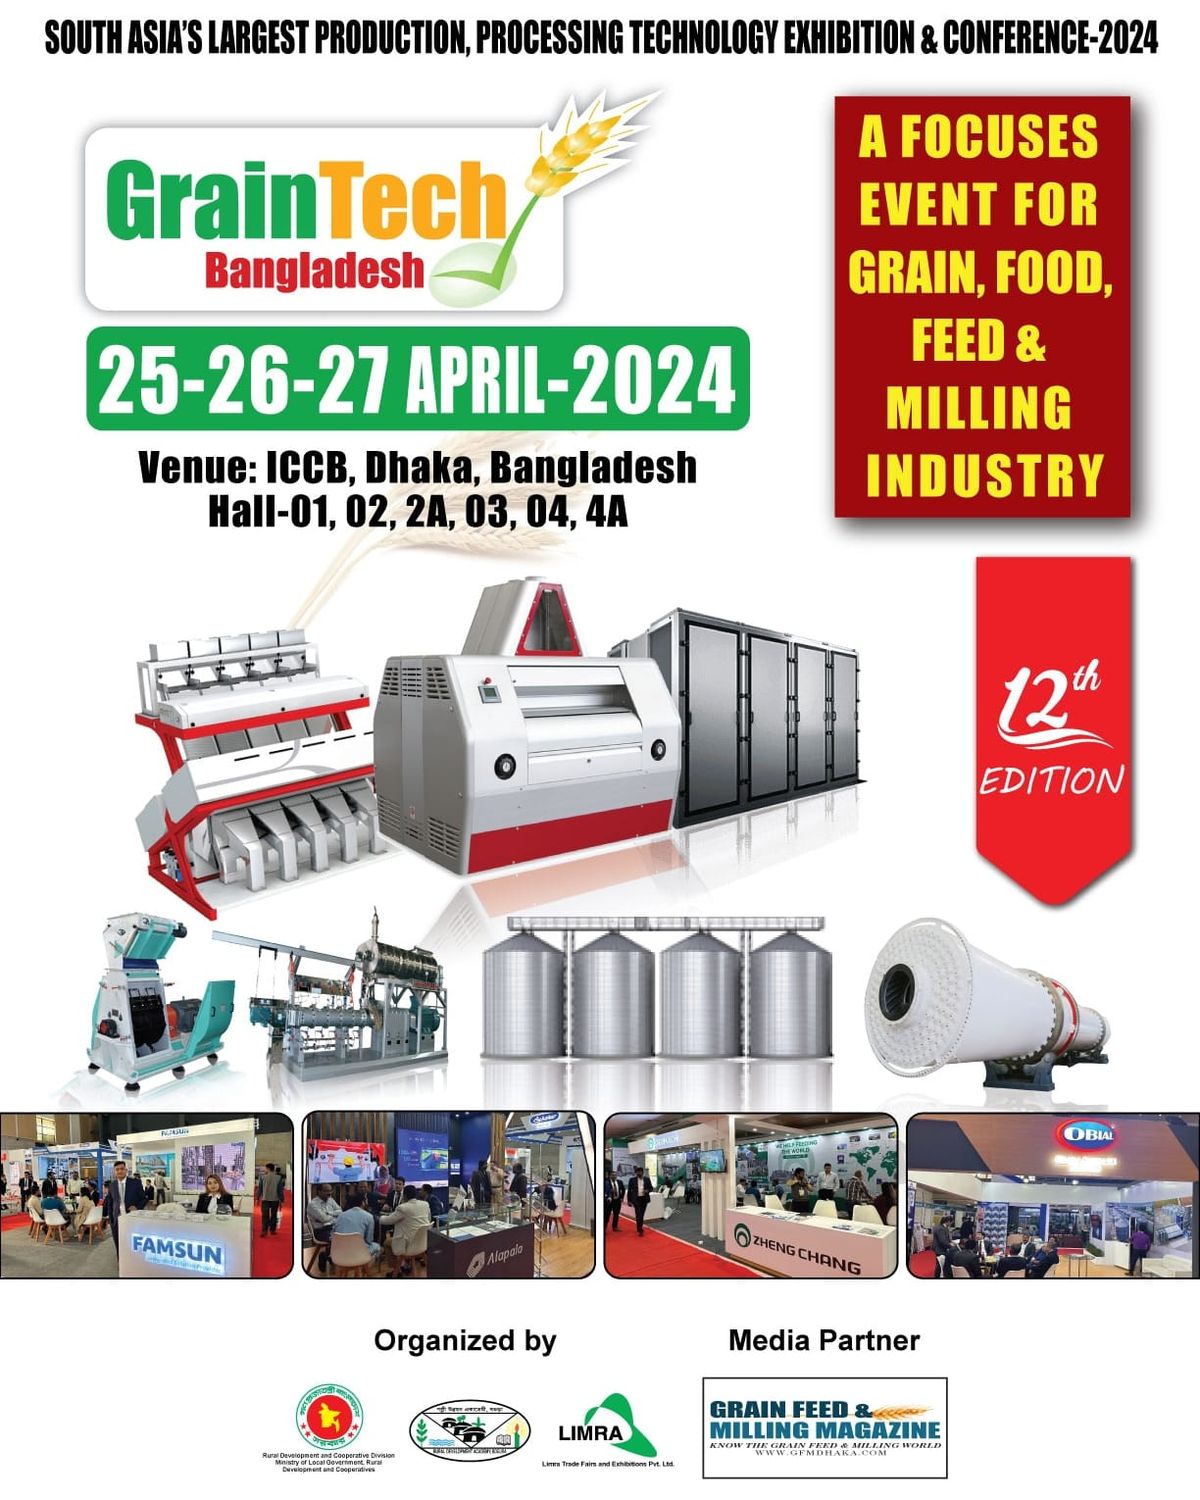 Grain Tech Bangladesh-2024 International Exhibition & Conference (12th Edition)